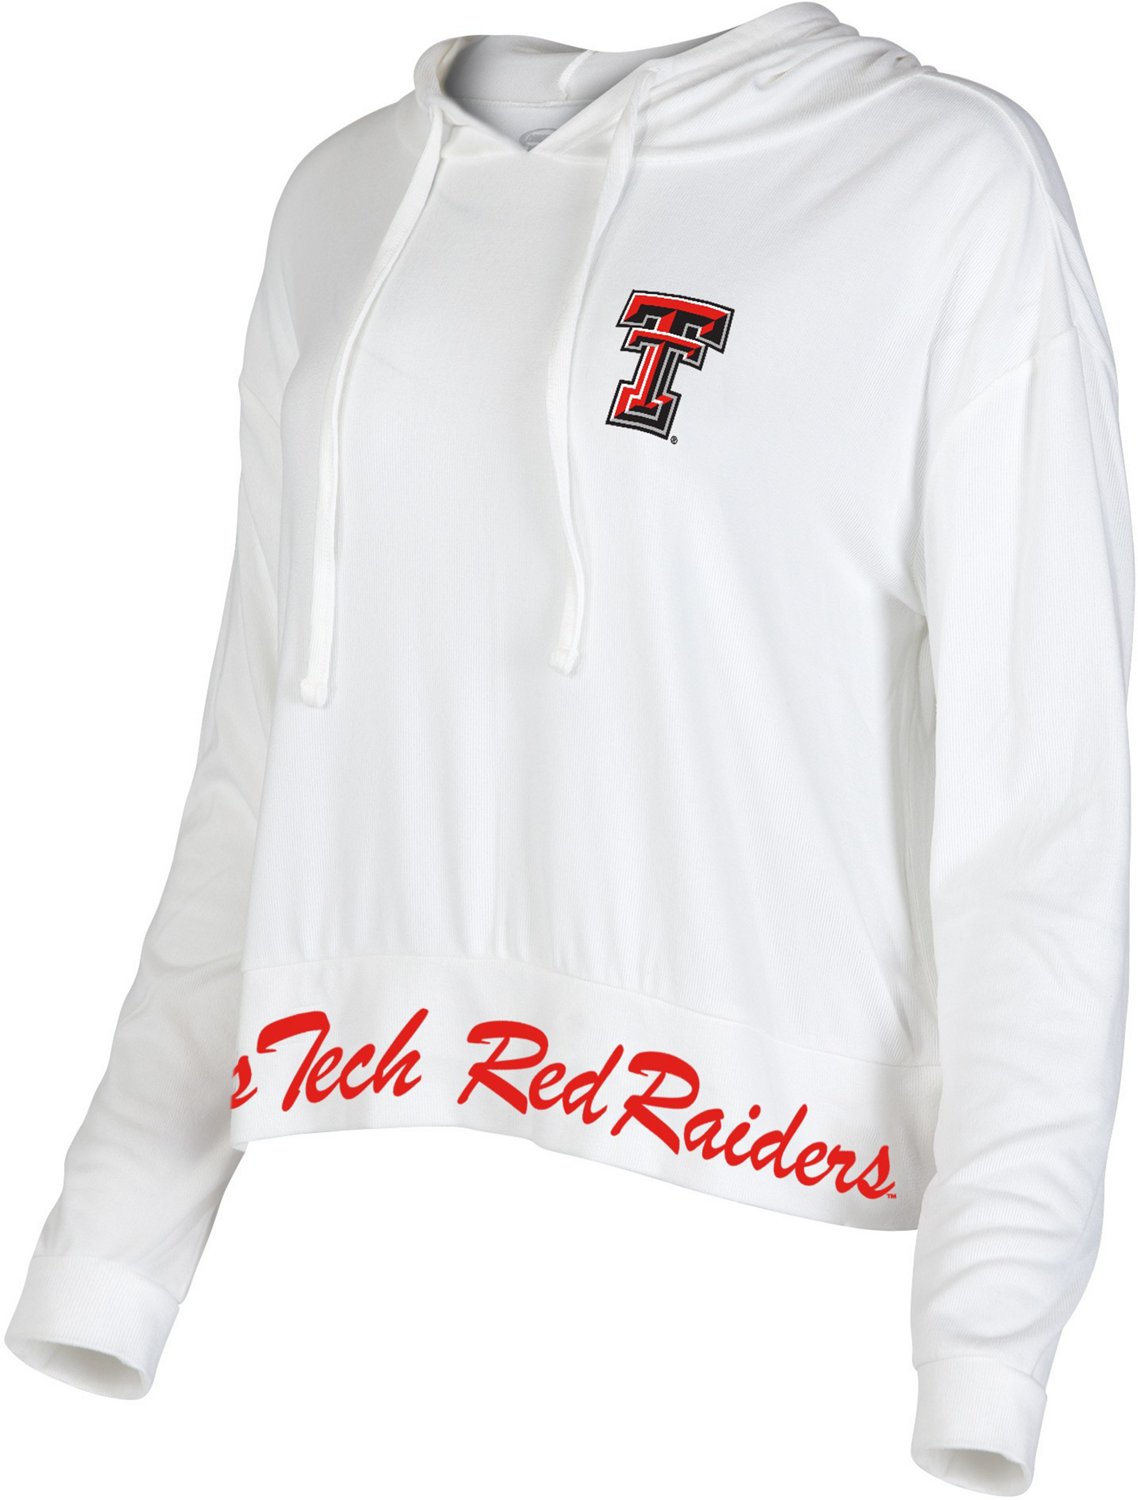 Texas Rangers Antigua Groove Polo - White/Red